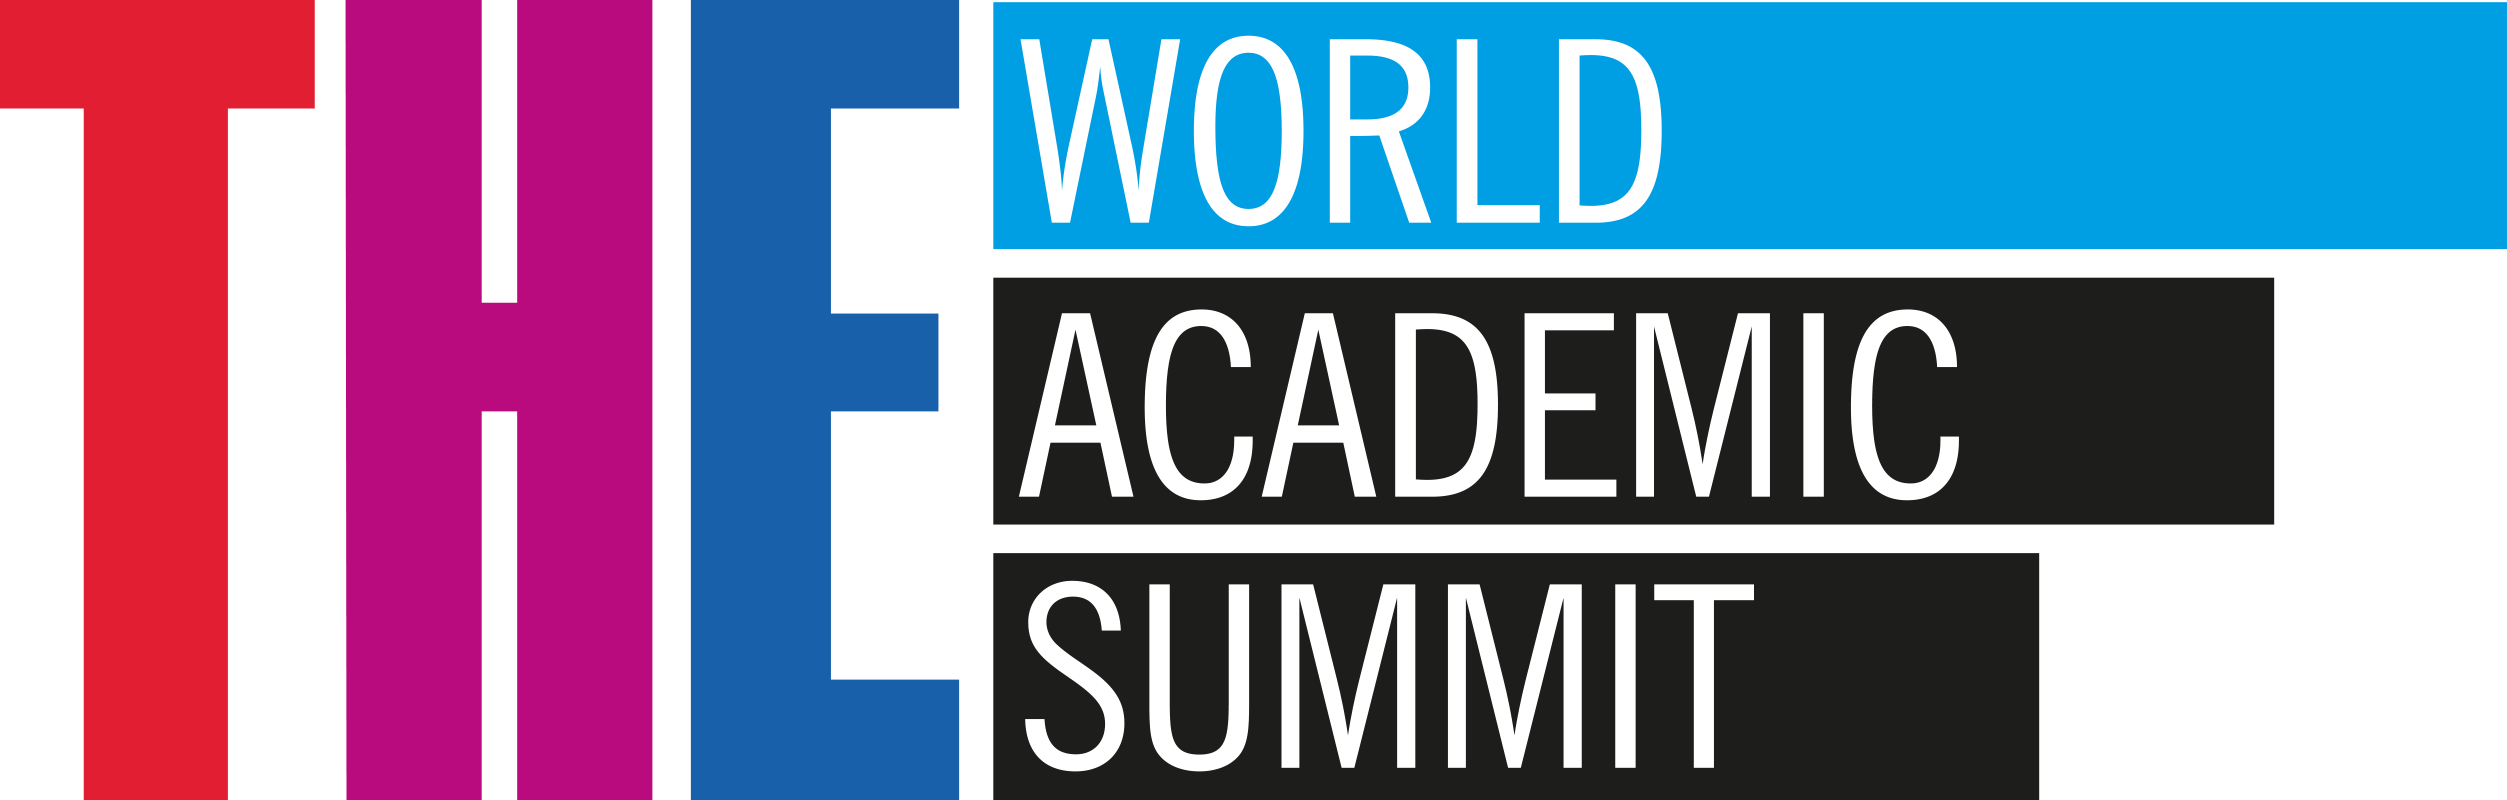 World Academic Summit